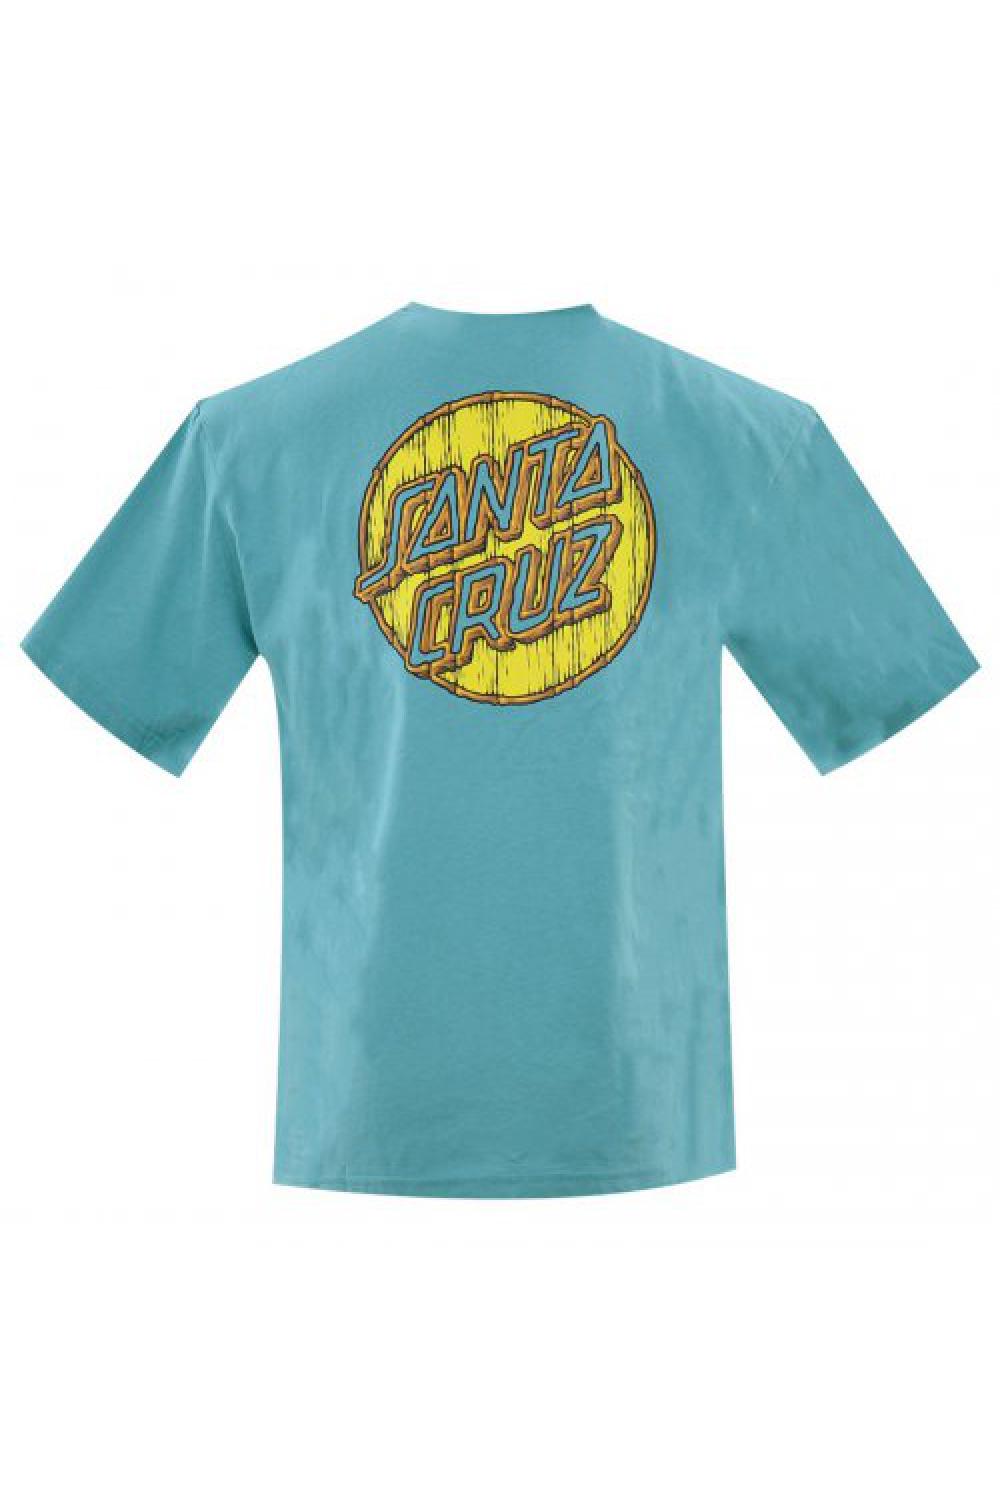 SANTA CRUZ T-shirt Tiki Dot Unisex - Turquoise (SCA-TEE-7478)